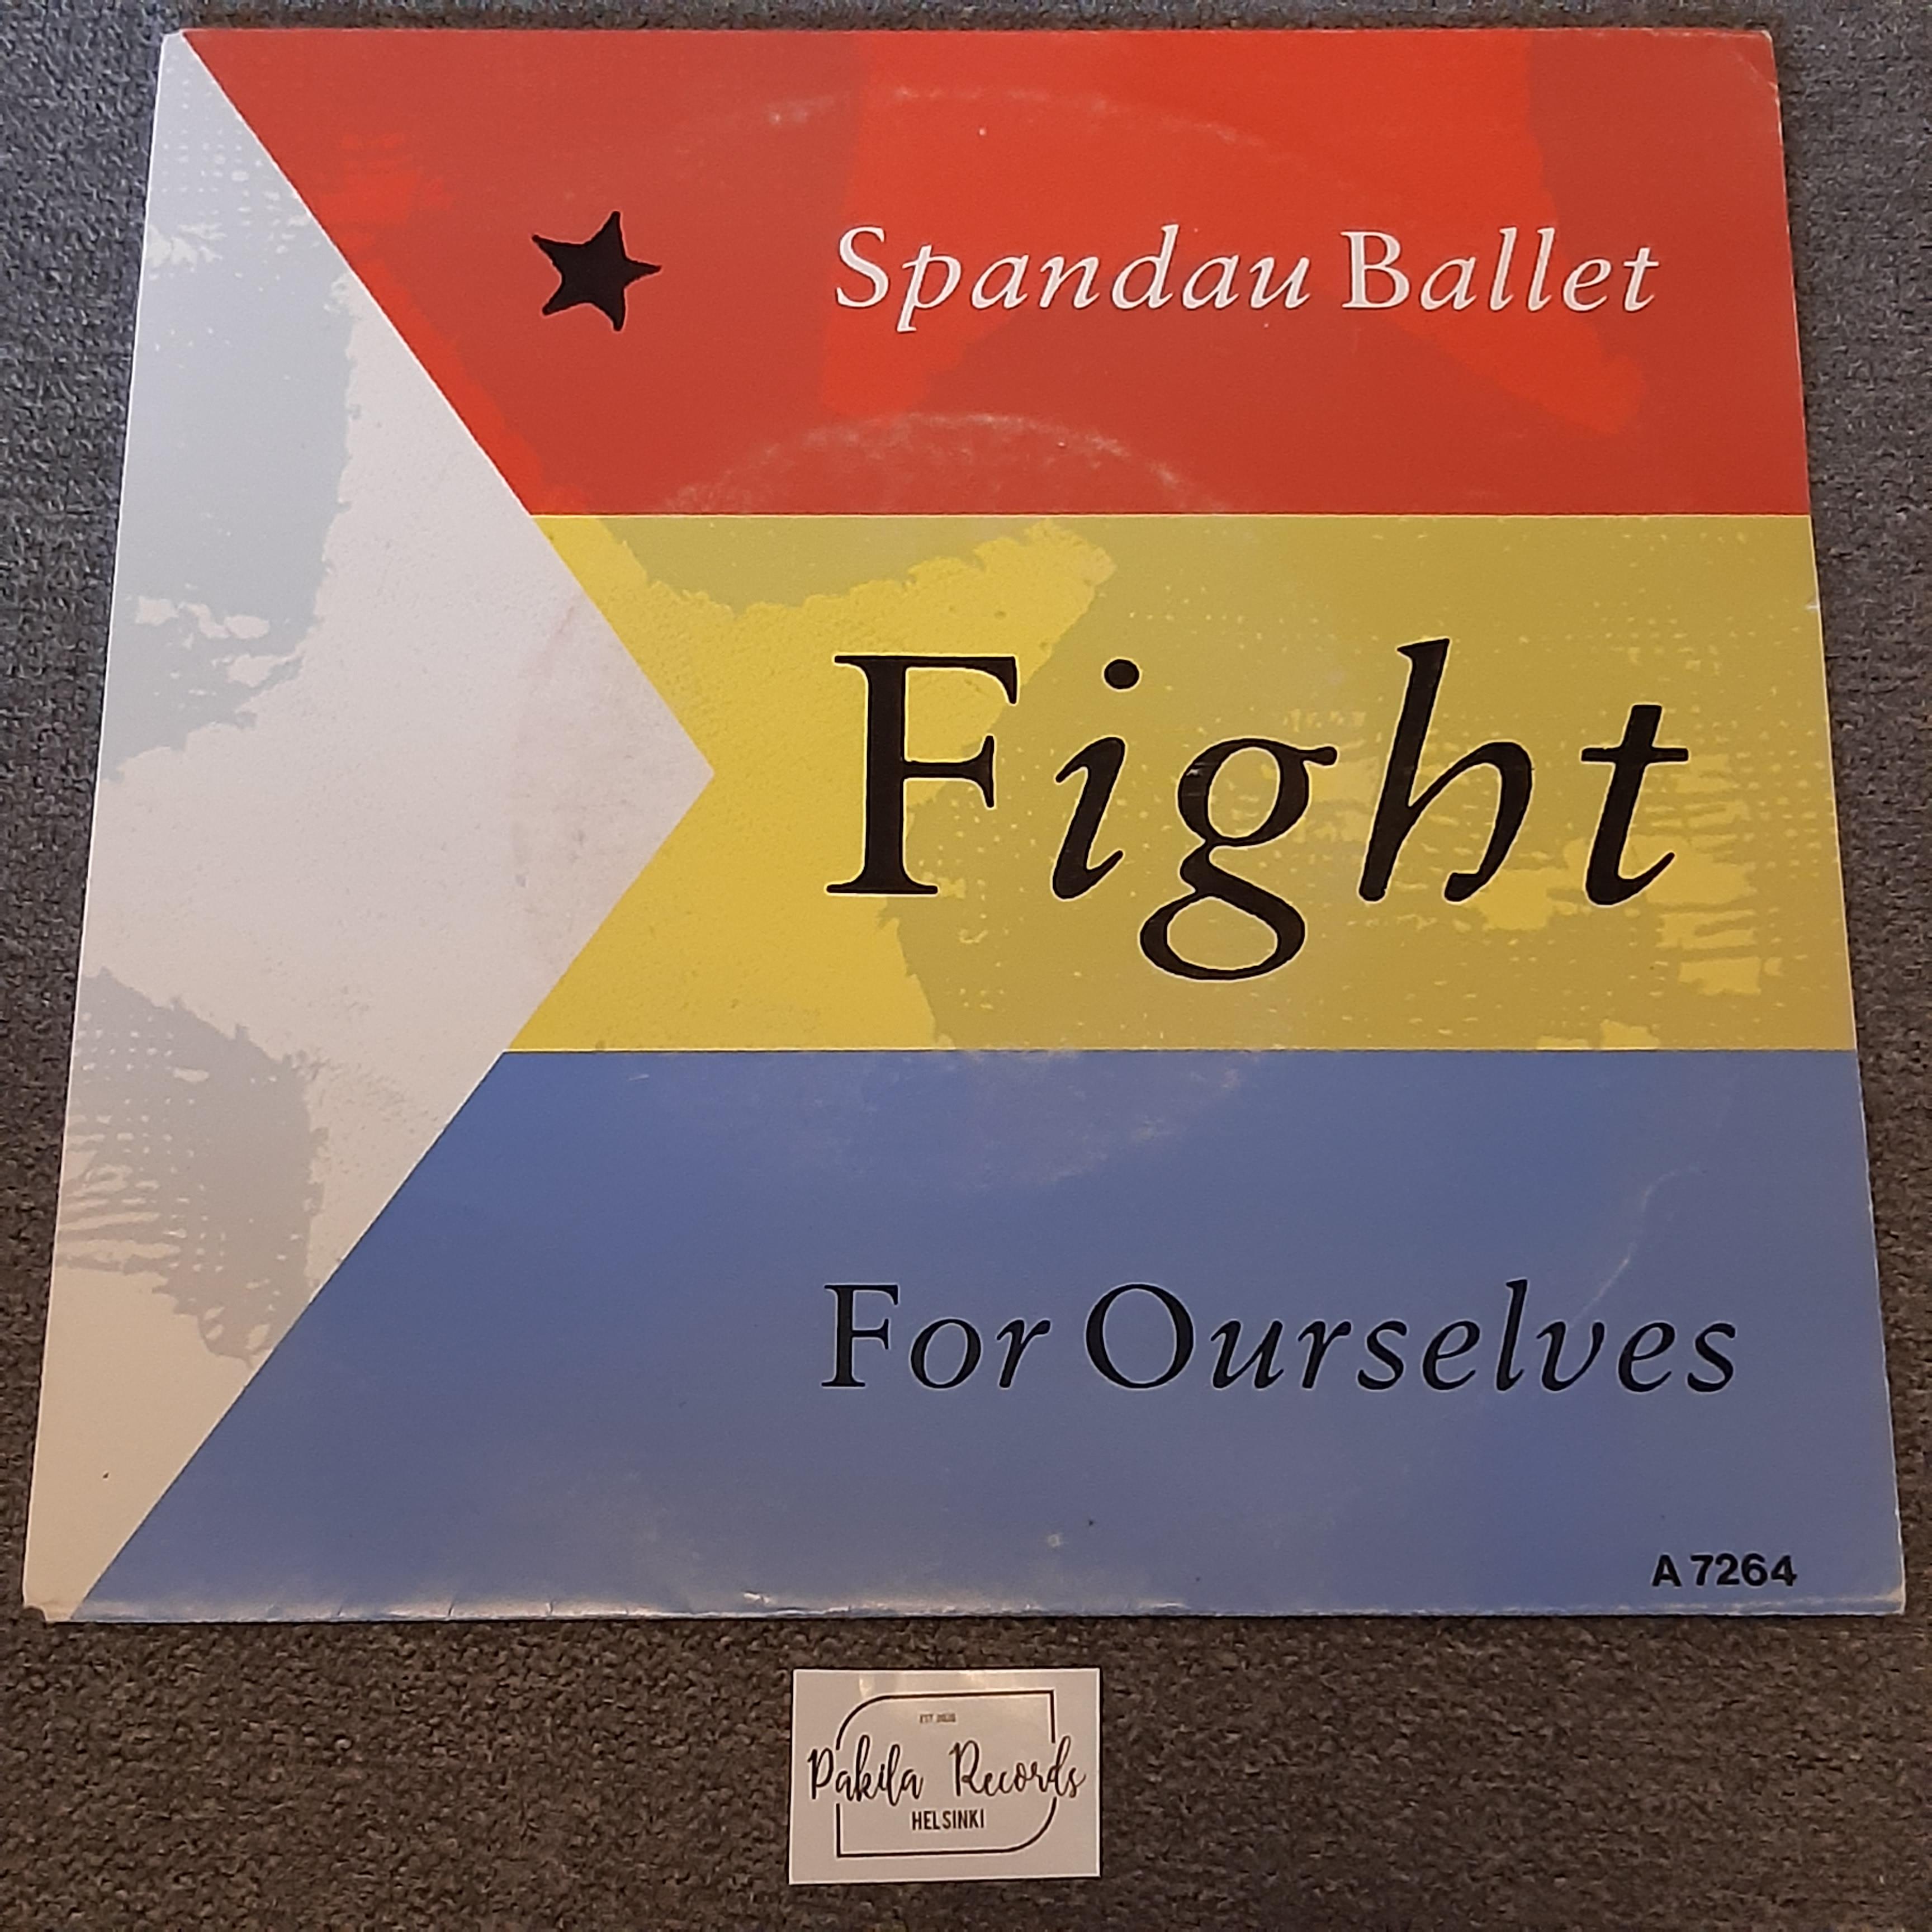 Spandau Ballet - Fight For Ourselves - Single 7" (käytetty)